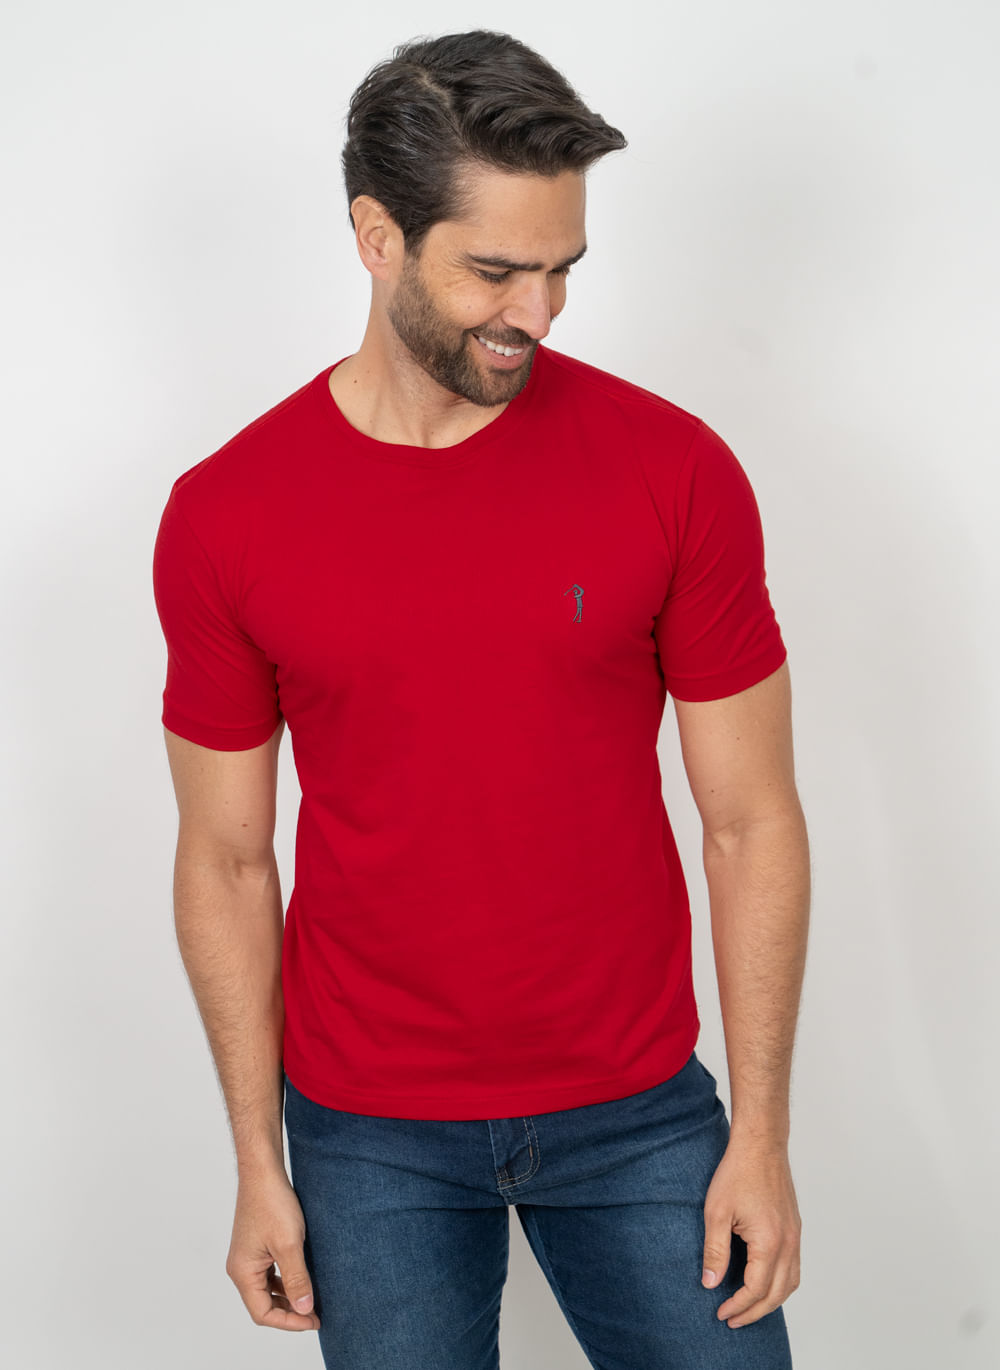 Camiseta-Basica-Aleatory-Fit-Vermelha-Vermelho-P